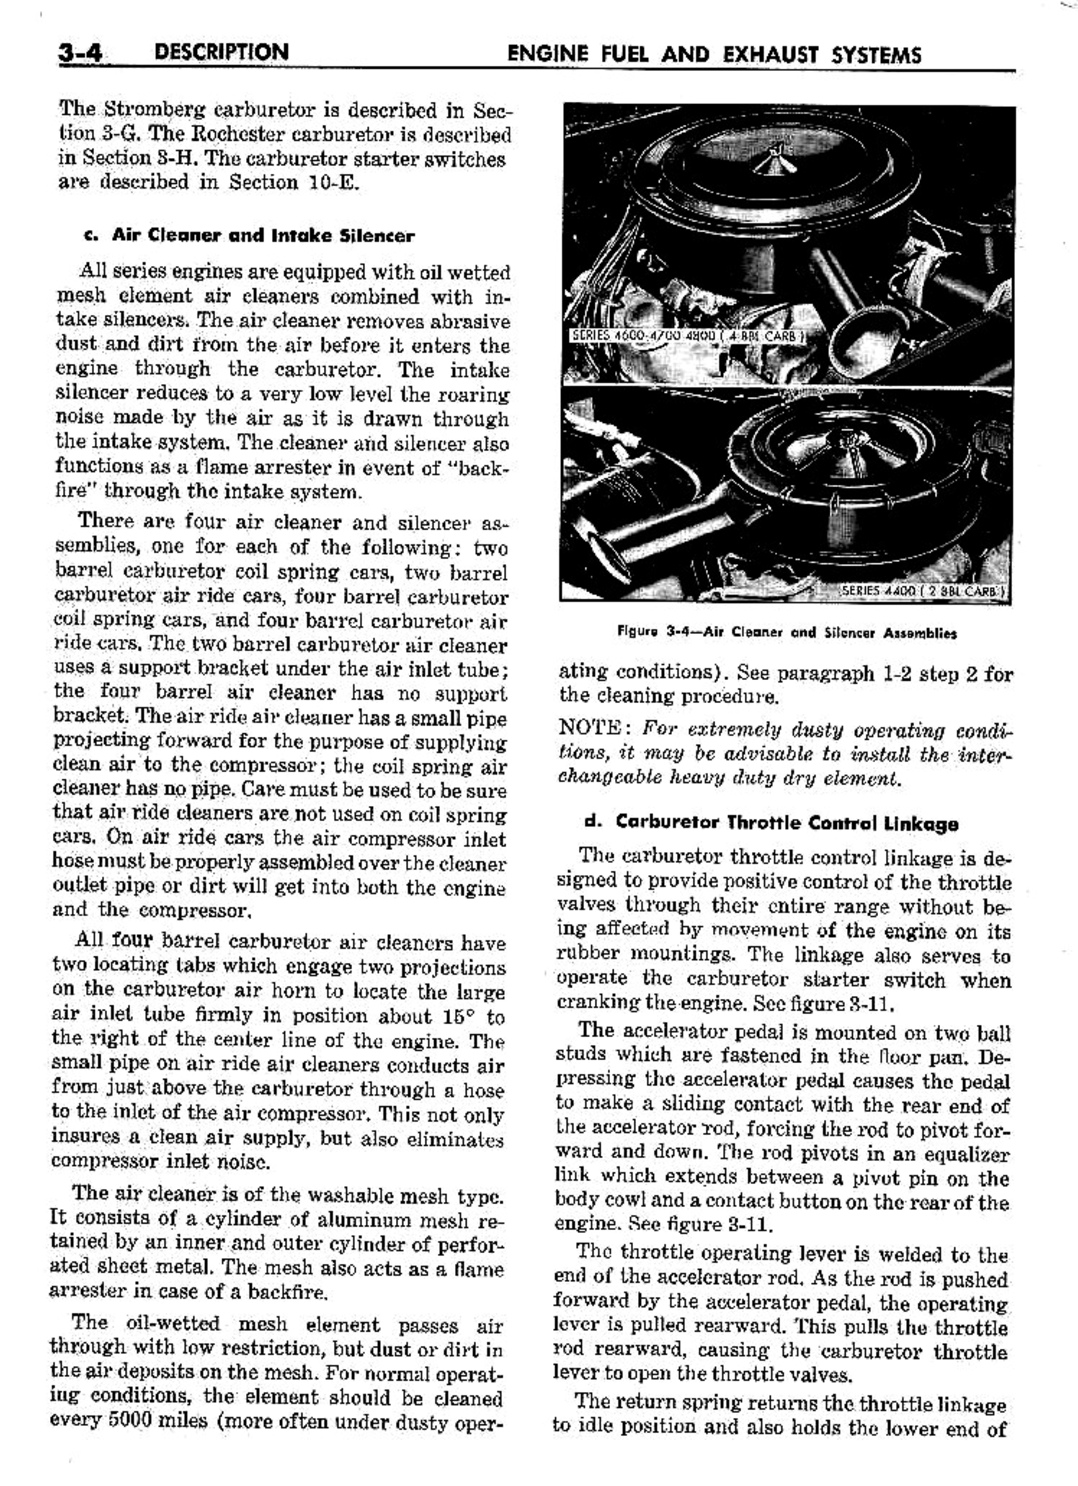 n_04 1959 Buick Shop Manual - Engine Fuel & Exhaust-004-004.jpg